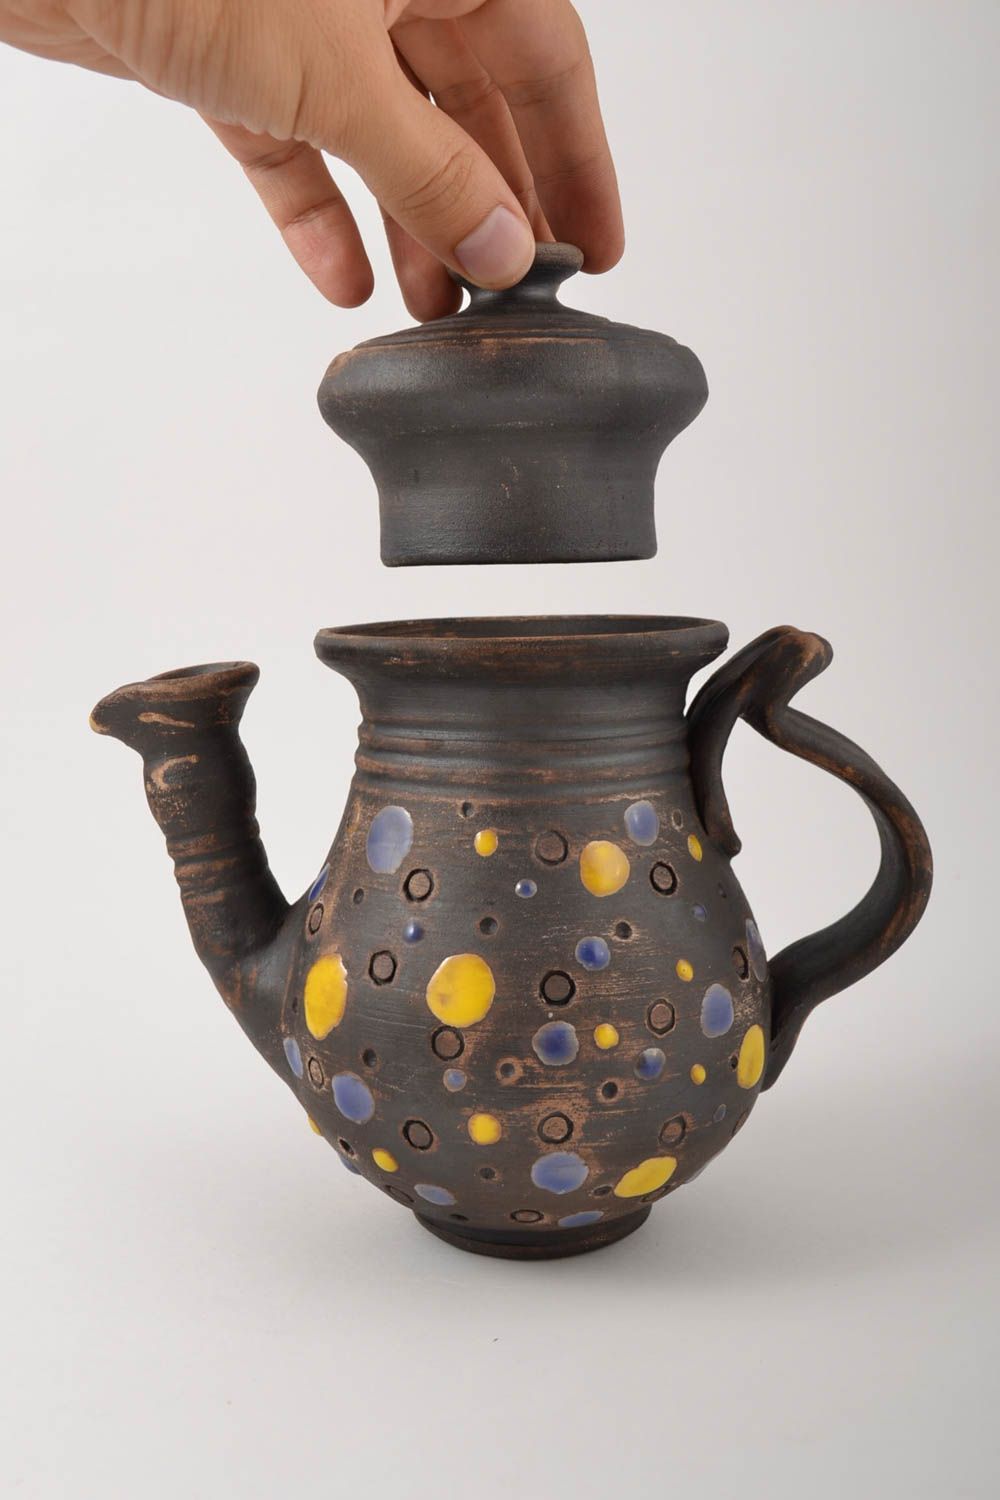 Beautiful handmade ceramic teapot pottery works kitchen supplies gift ideas photo 5